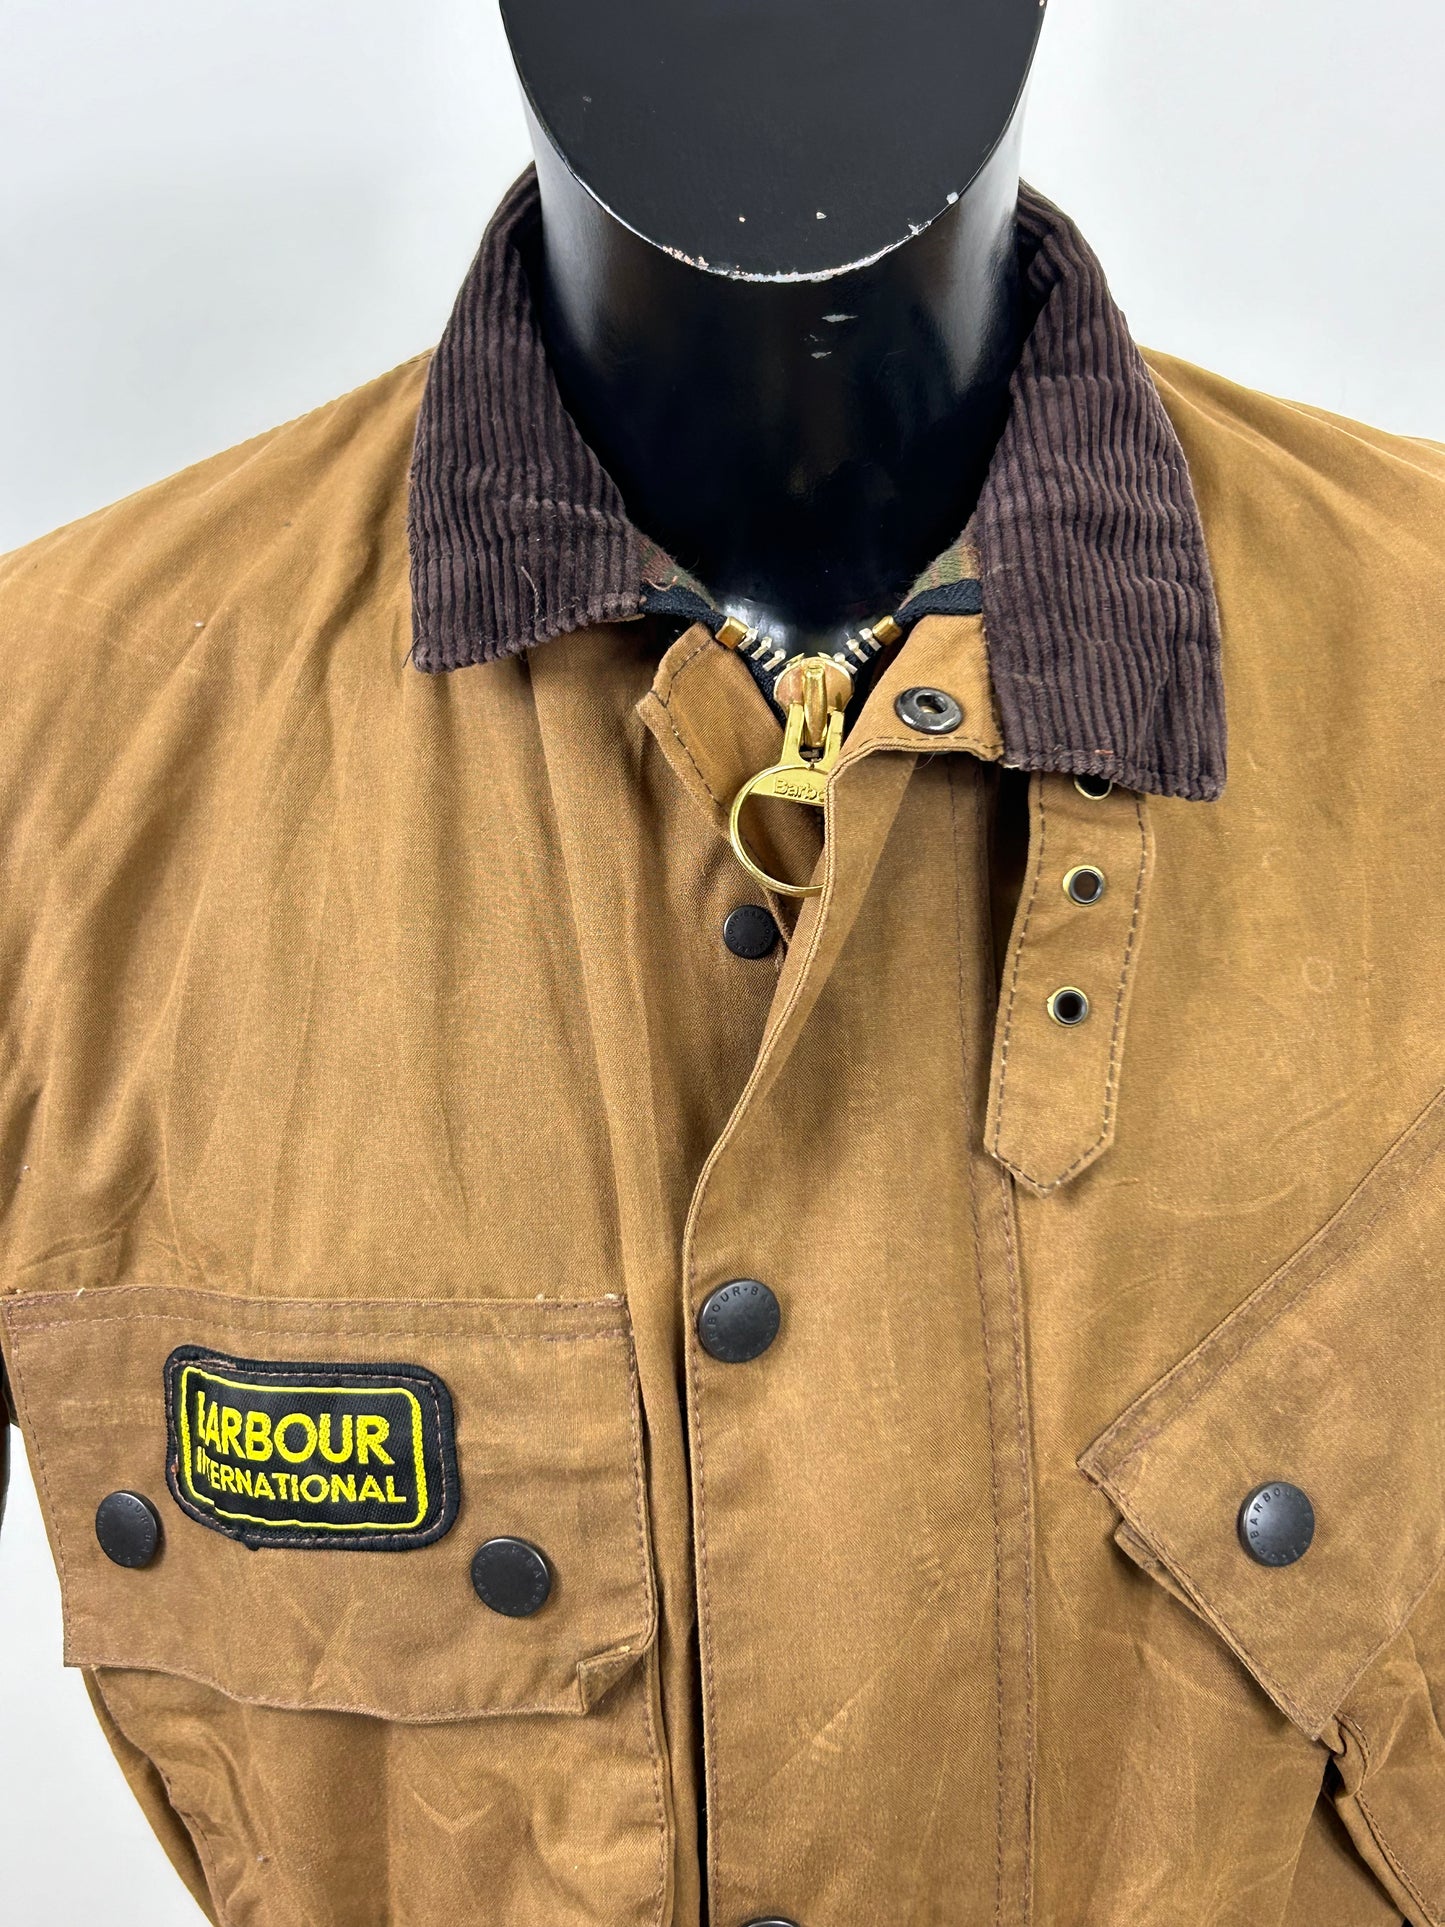 GIacca Barbour International da uomo marrone chiaro c38/97cm-Man Motorcycle brown jacket size S/Ml